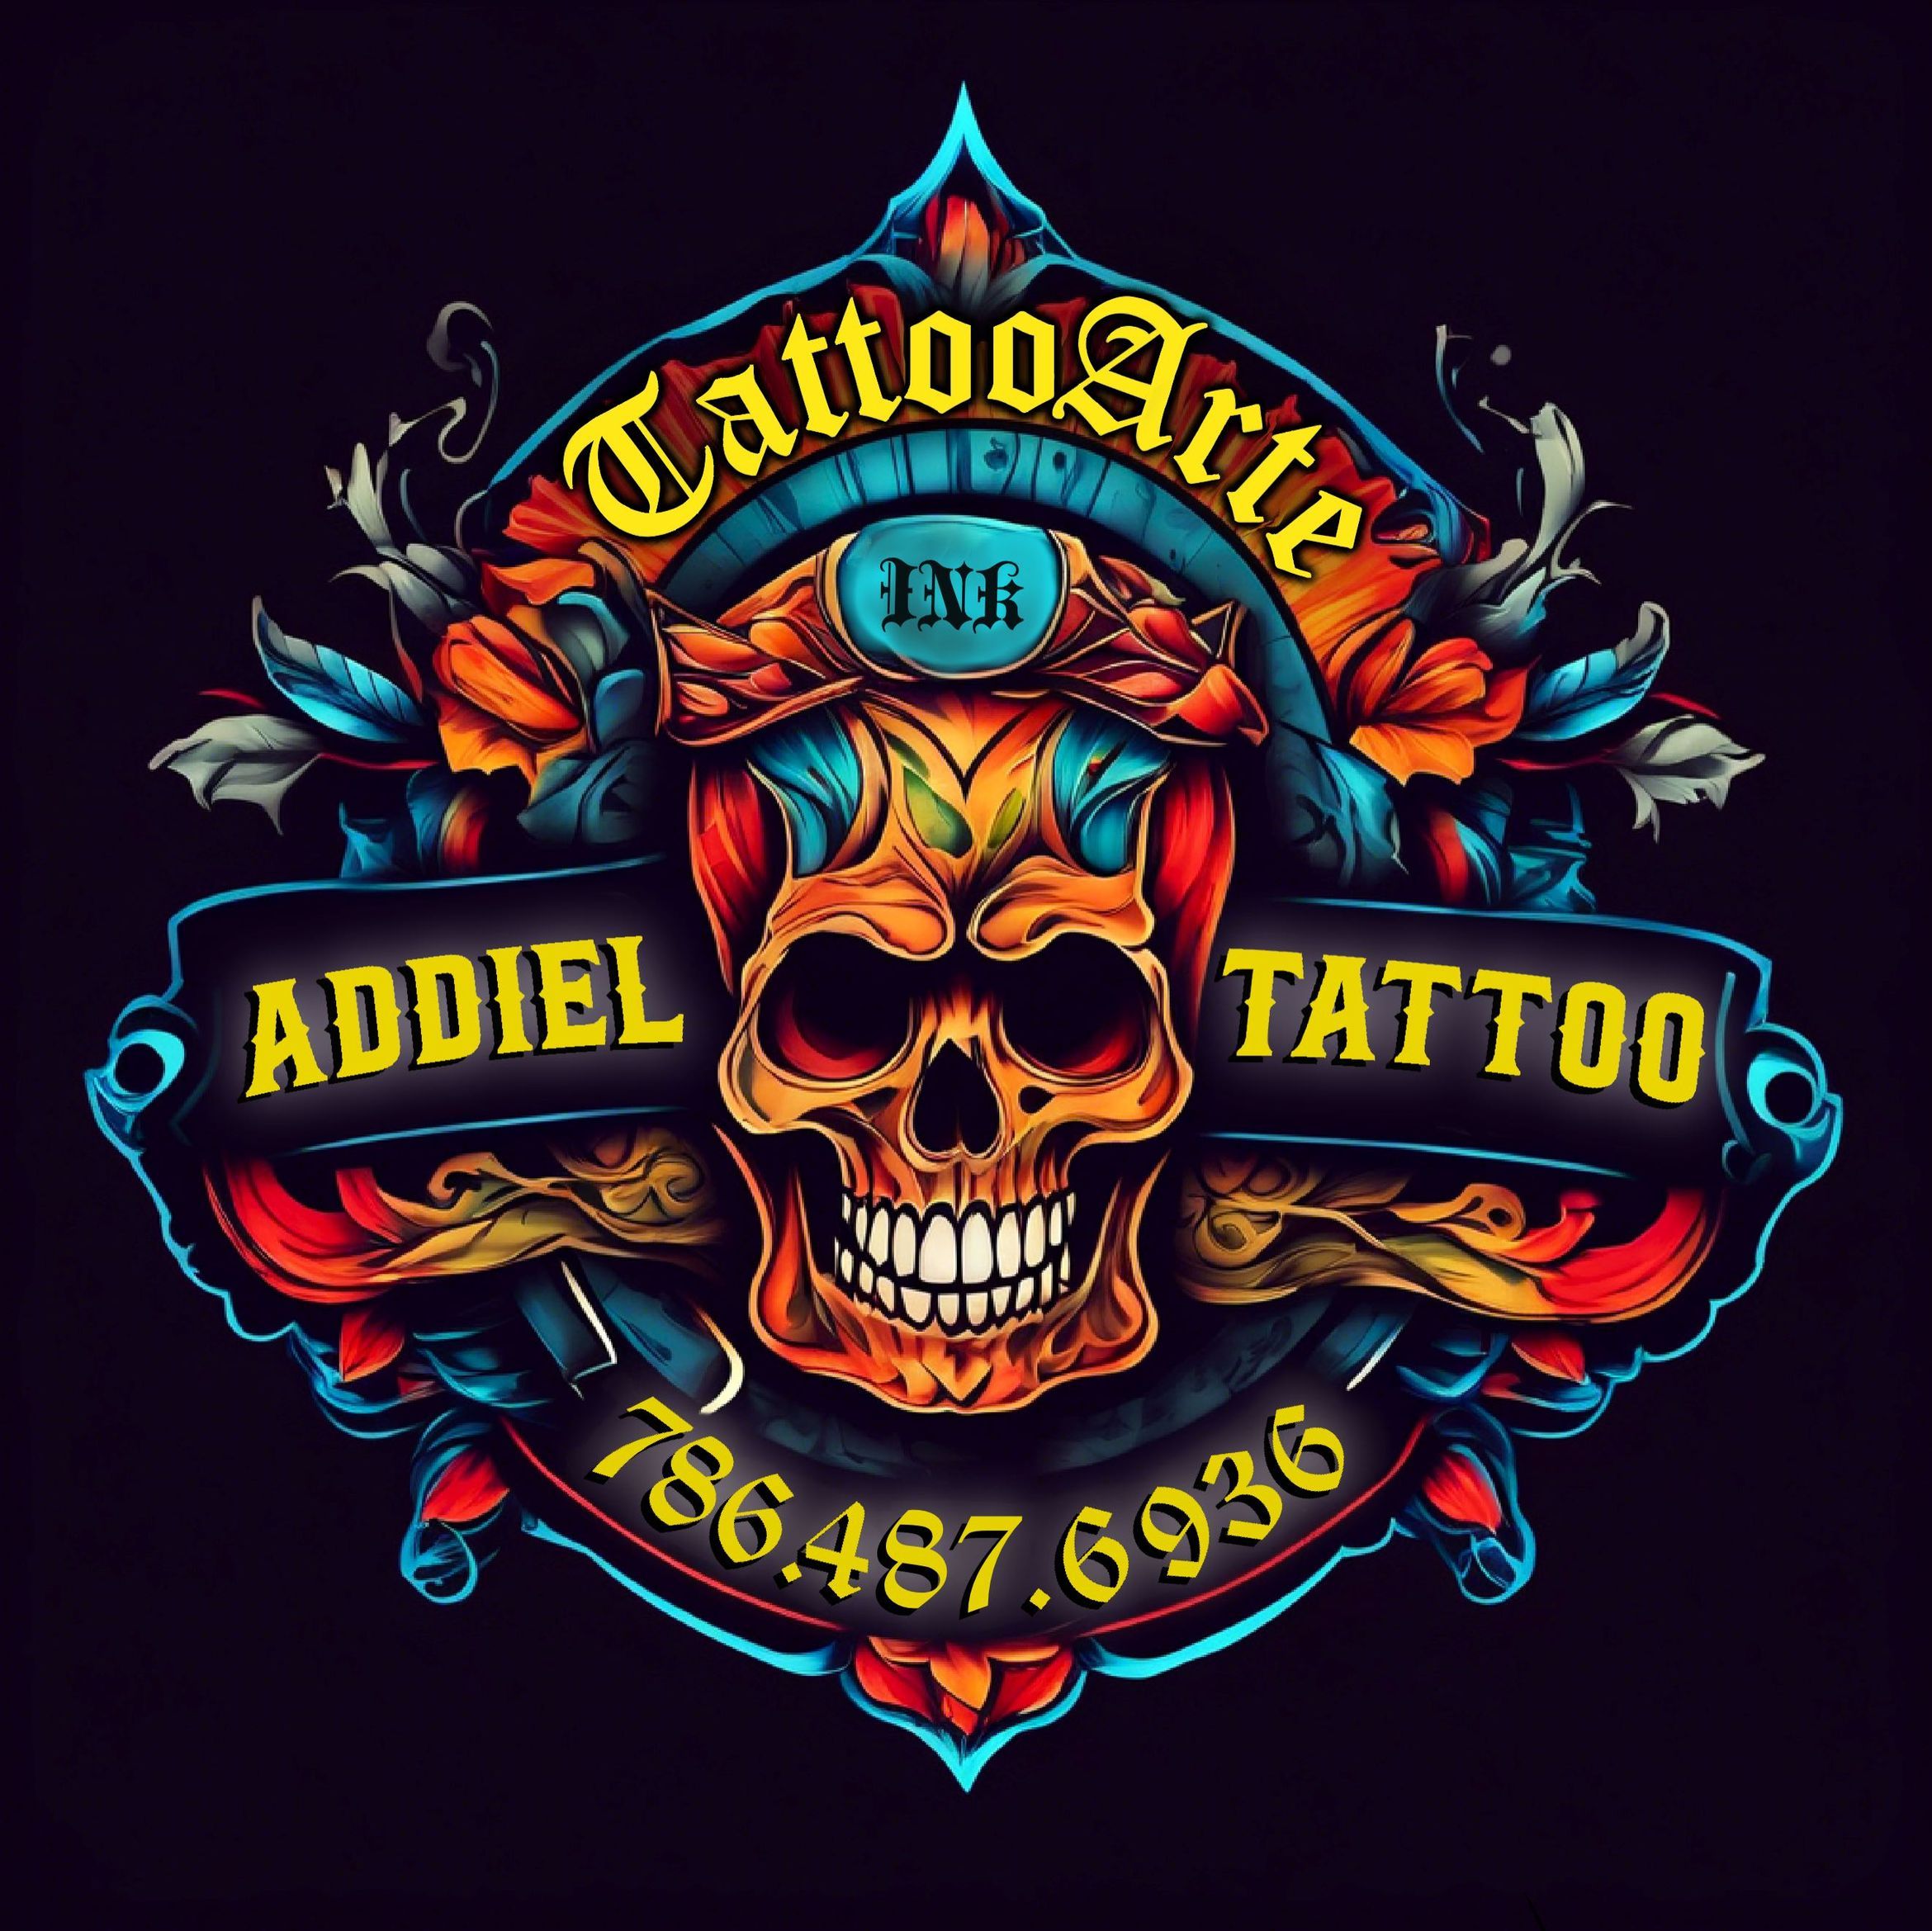 TattooArte, 7077 W Waters Ave, Tampa, 33634